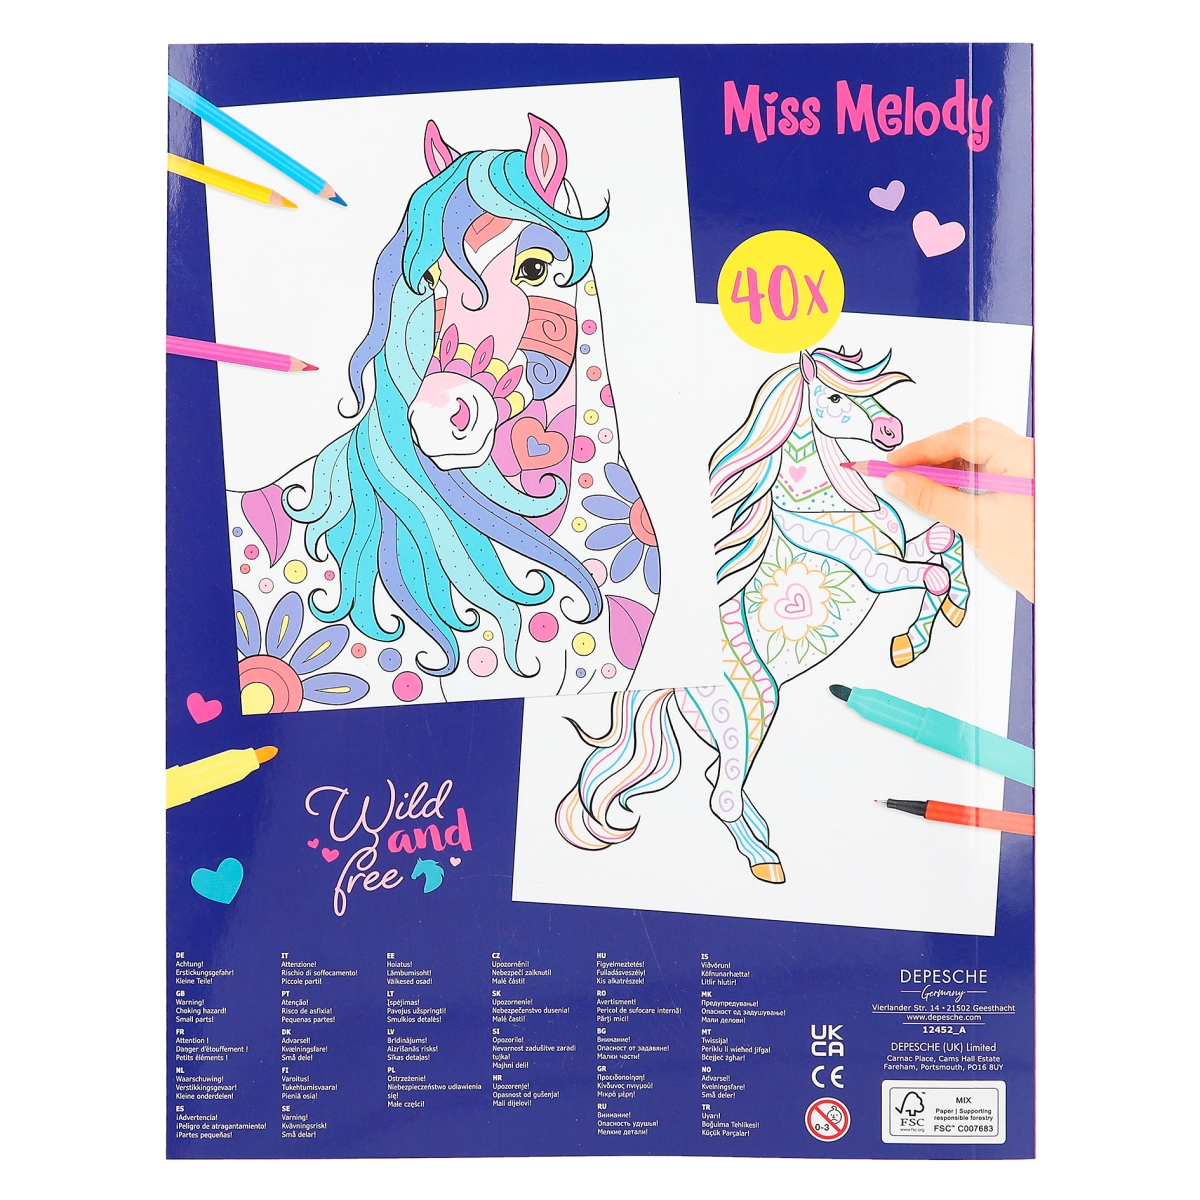 Depesche - Book Design & Melody Miss Colour